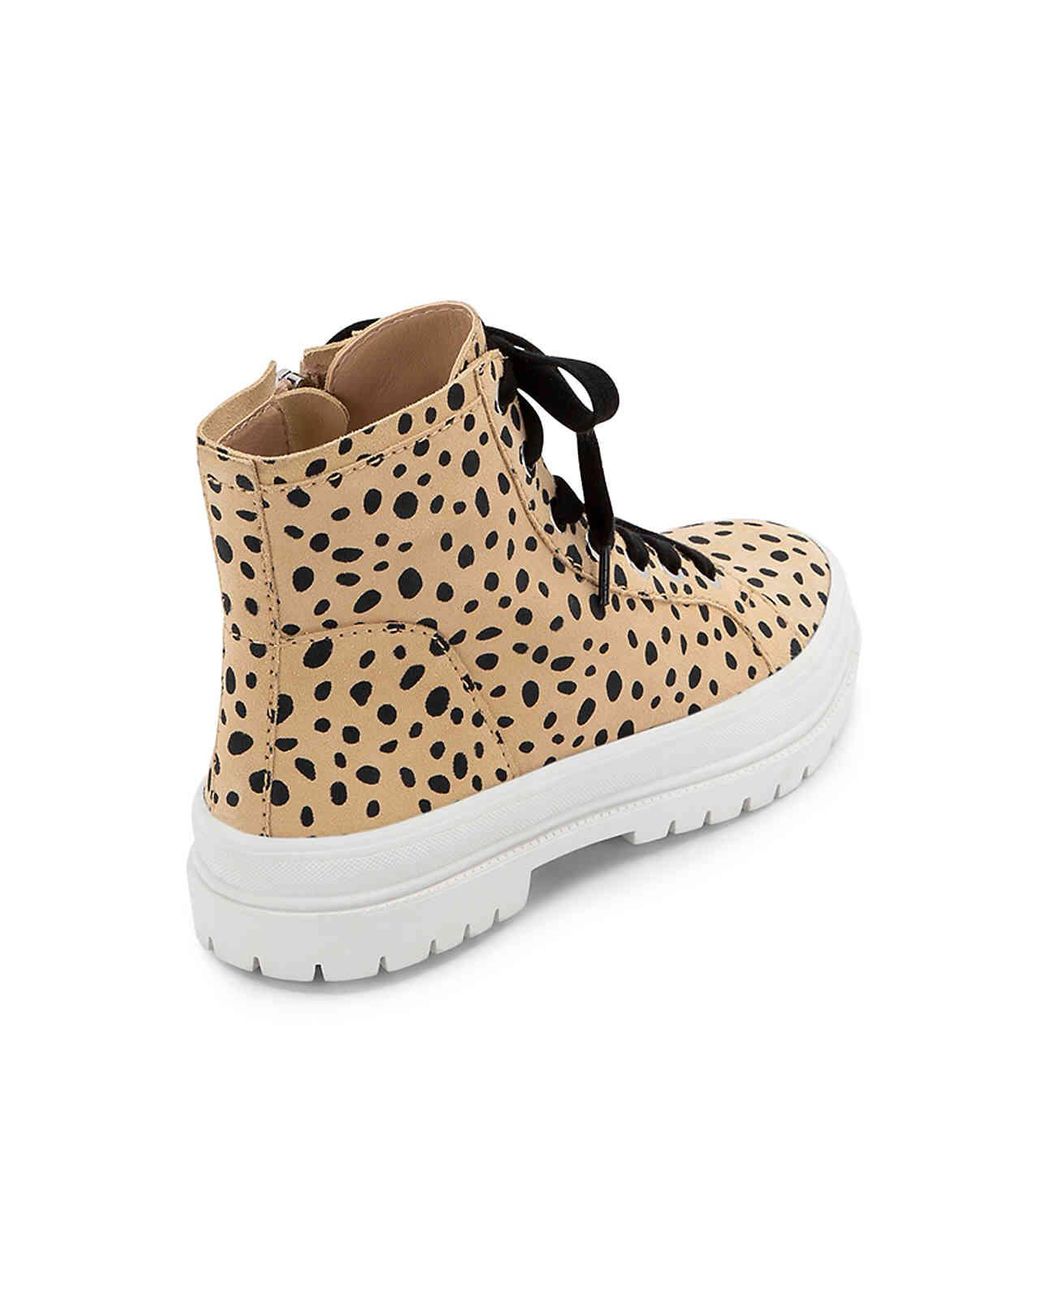 dolce vita cheetah booties